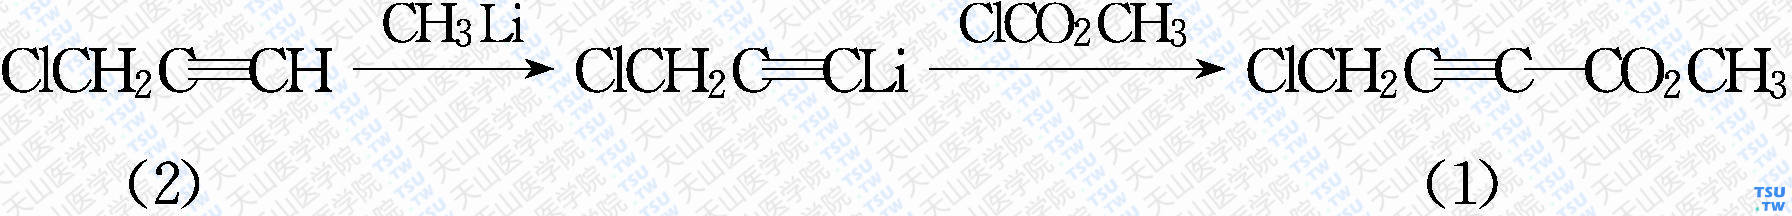 4-氯-2-丁炔酸甲酯（分子式：C<sub>5</sub>H<sub>5</sub>ClO<sub>2</sub>）的合成方法路线及其结构式